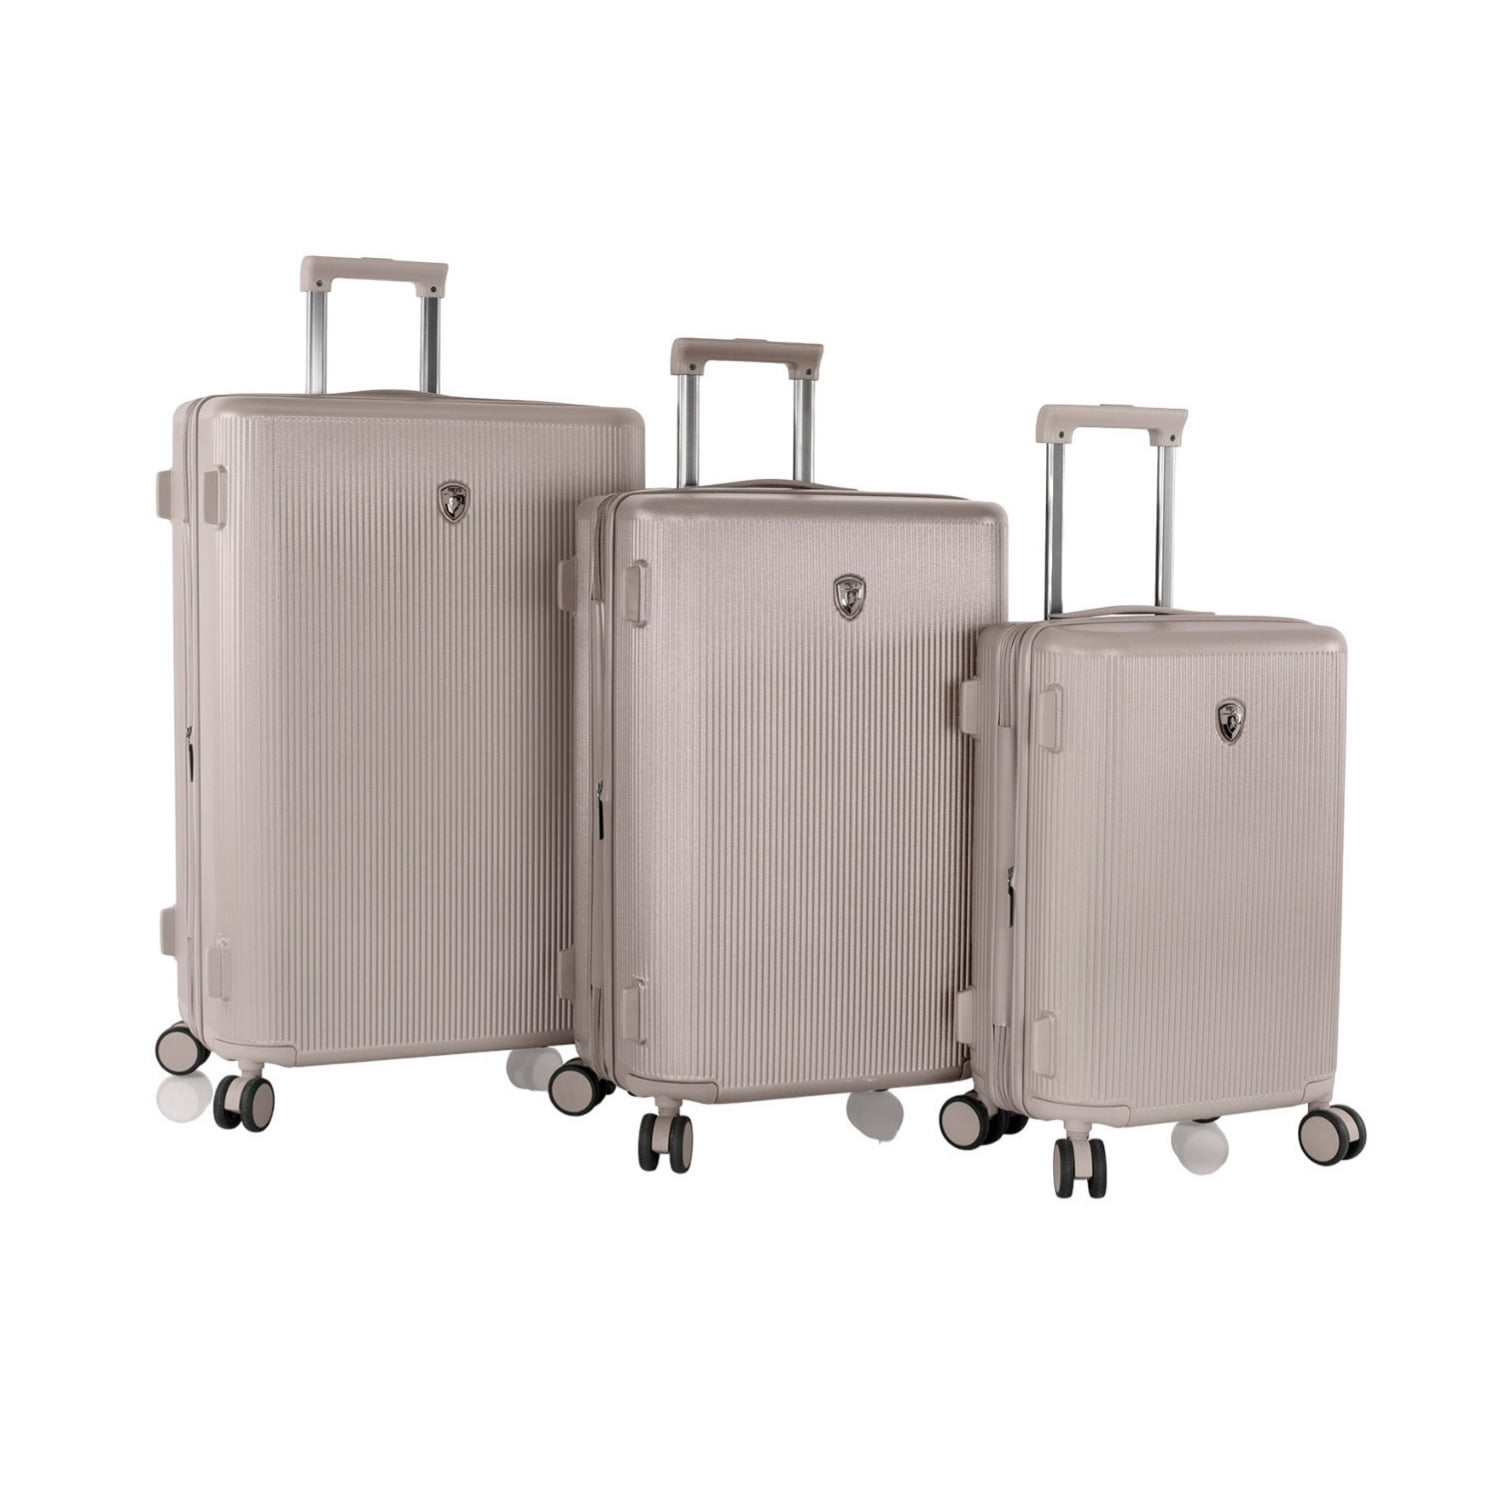 Luggage 3-Piece Tones Set 26-Inch, 21-inch) (Atmosphere, Earth Heys 30-Inch,